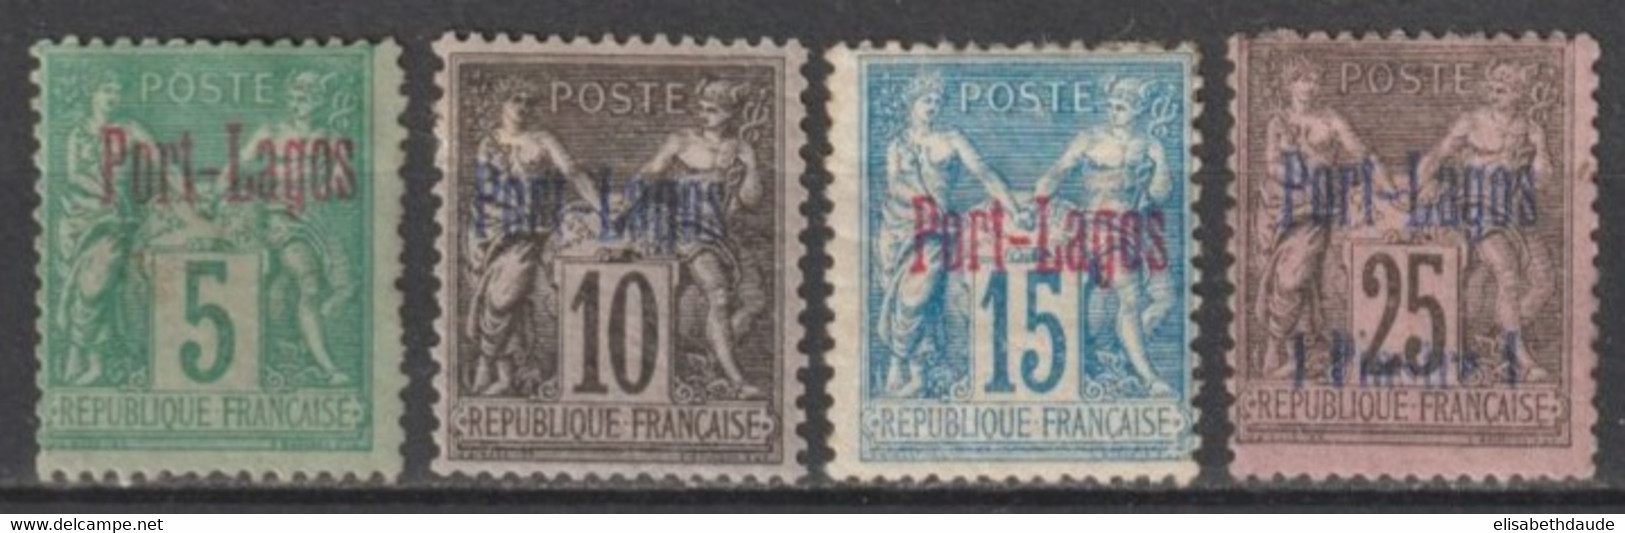 PORT LAGOS - 1893 - YVERT N° 1/4 * MH CHARNIERE ASSEZ FORTE - COTE = 335 EUR. - Unused Stamps